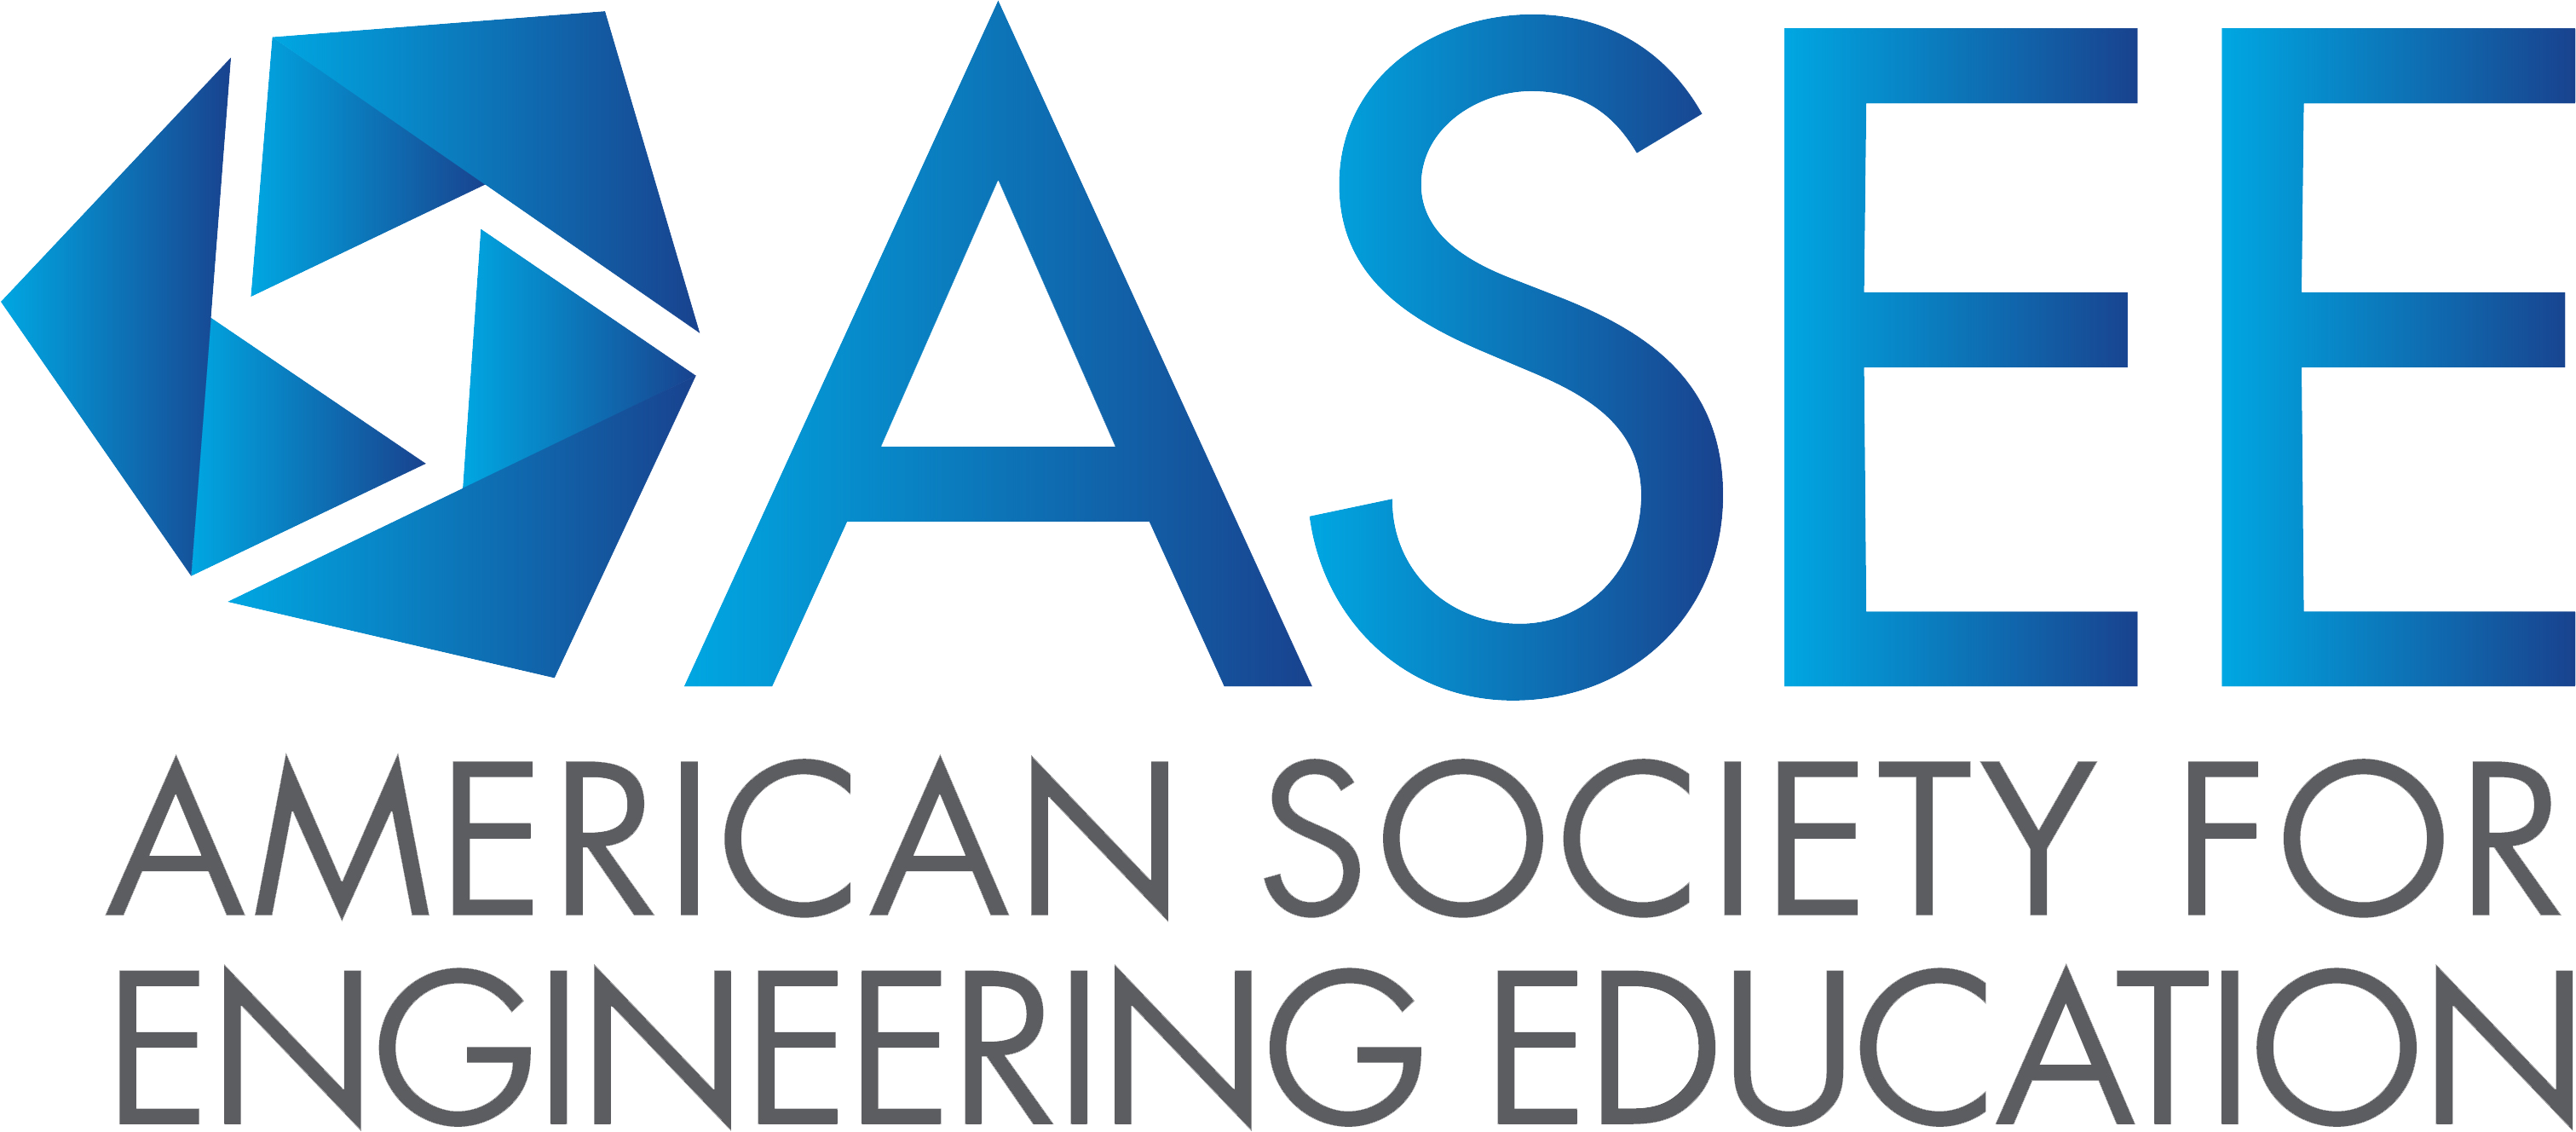 Американское общество магов. Американское общество по качеству (American Society for quality, ASQ).. Ultimate Education логотип. Engineering Education. Impect Education logo.